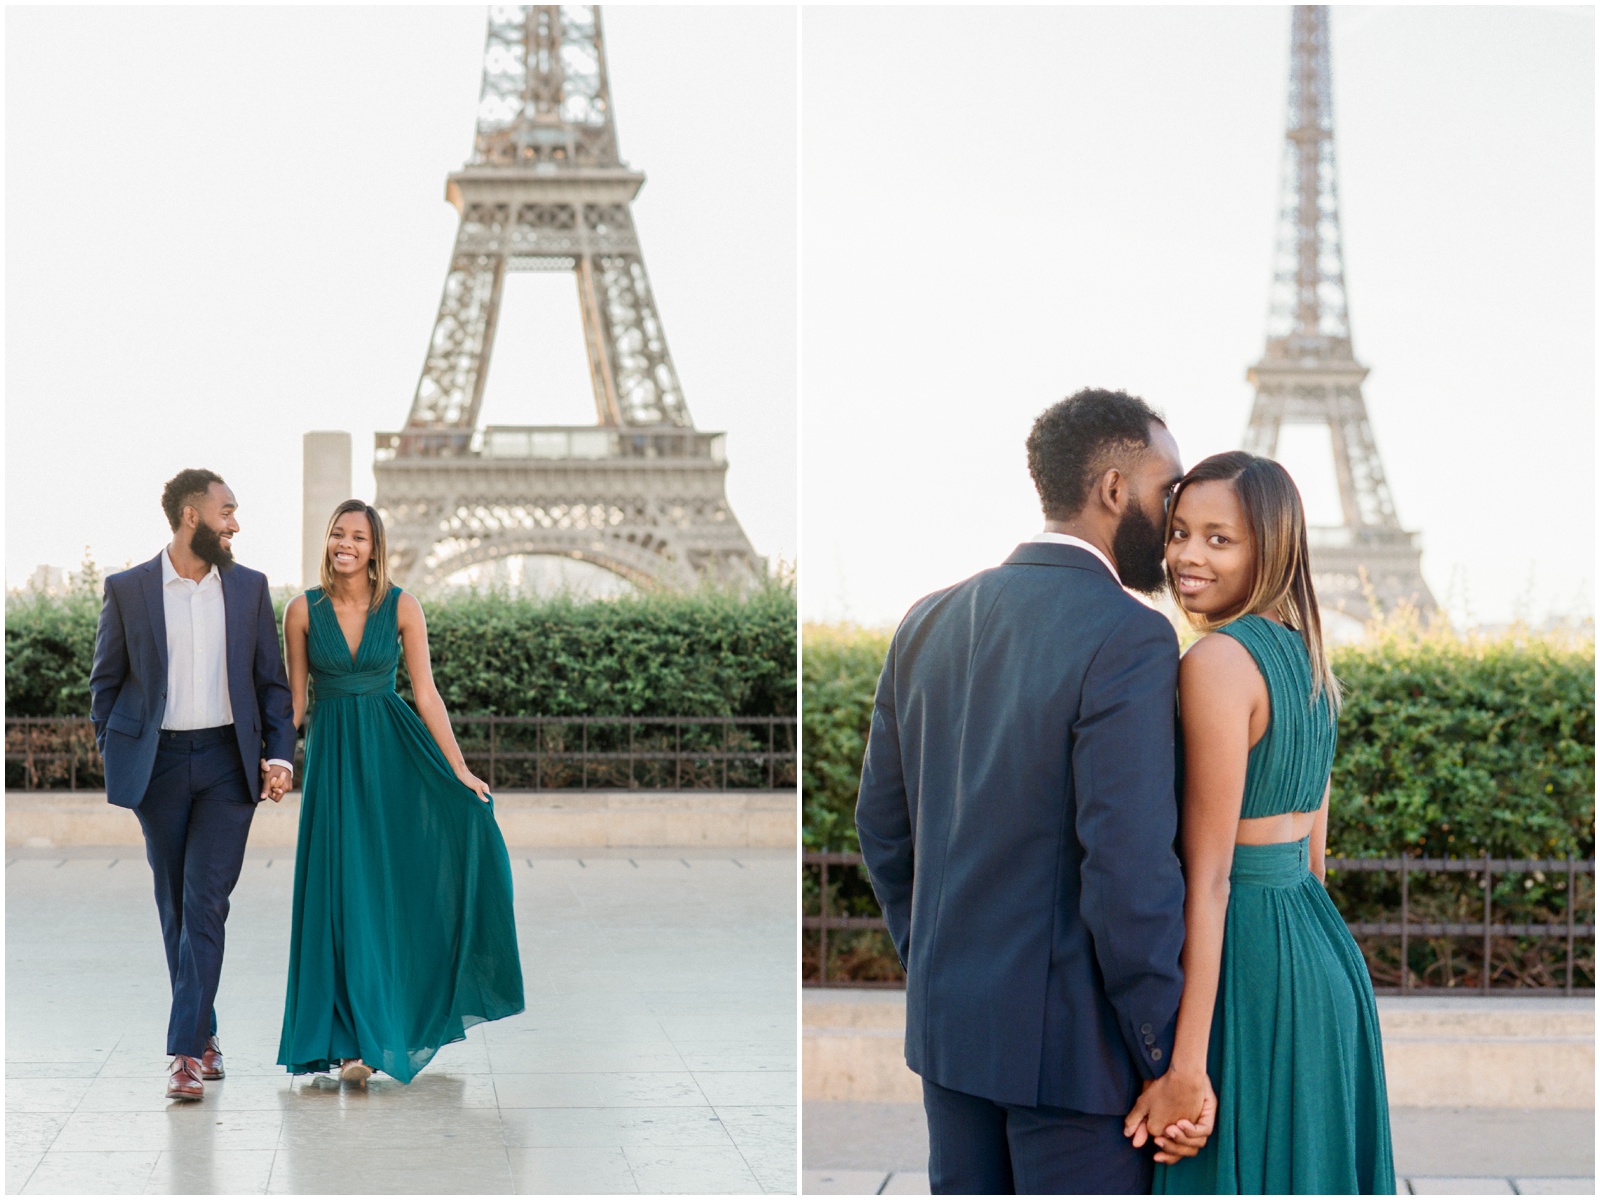 Romantic Eiffel Tower Engagement - Nicole Jansma Photography